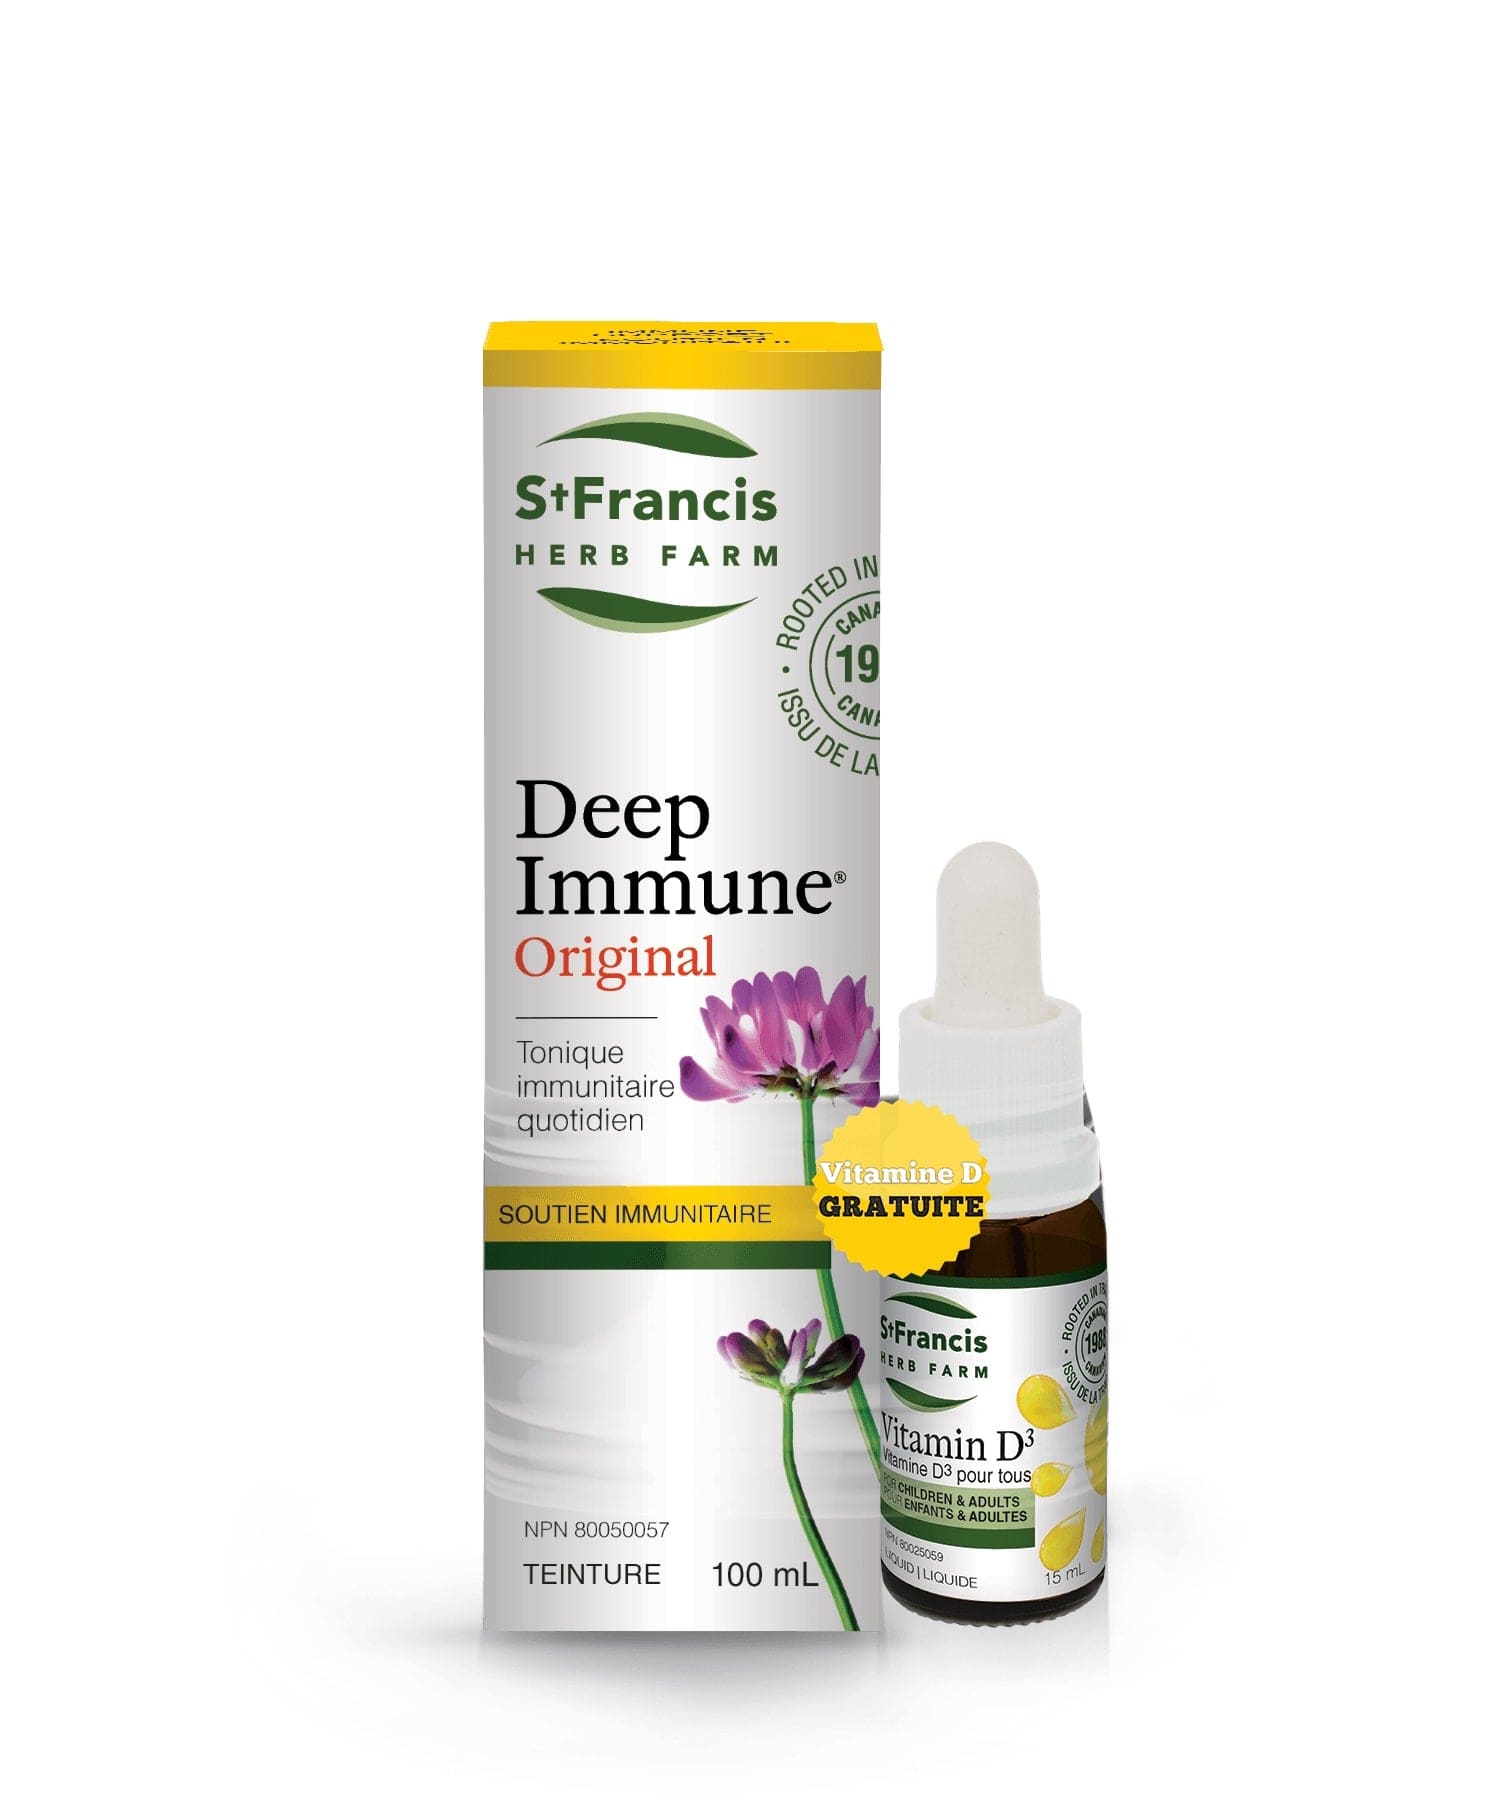 ST-FRANCIS HERB FARM Suppléments Duo Deep immune original + vitamine D accolée  100ml+15ml